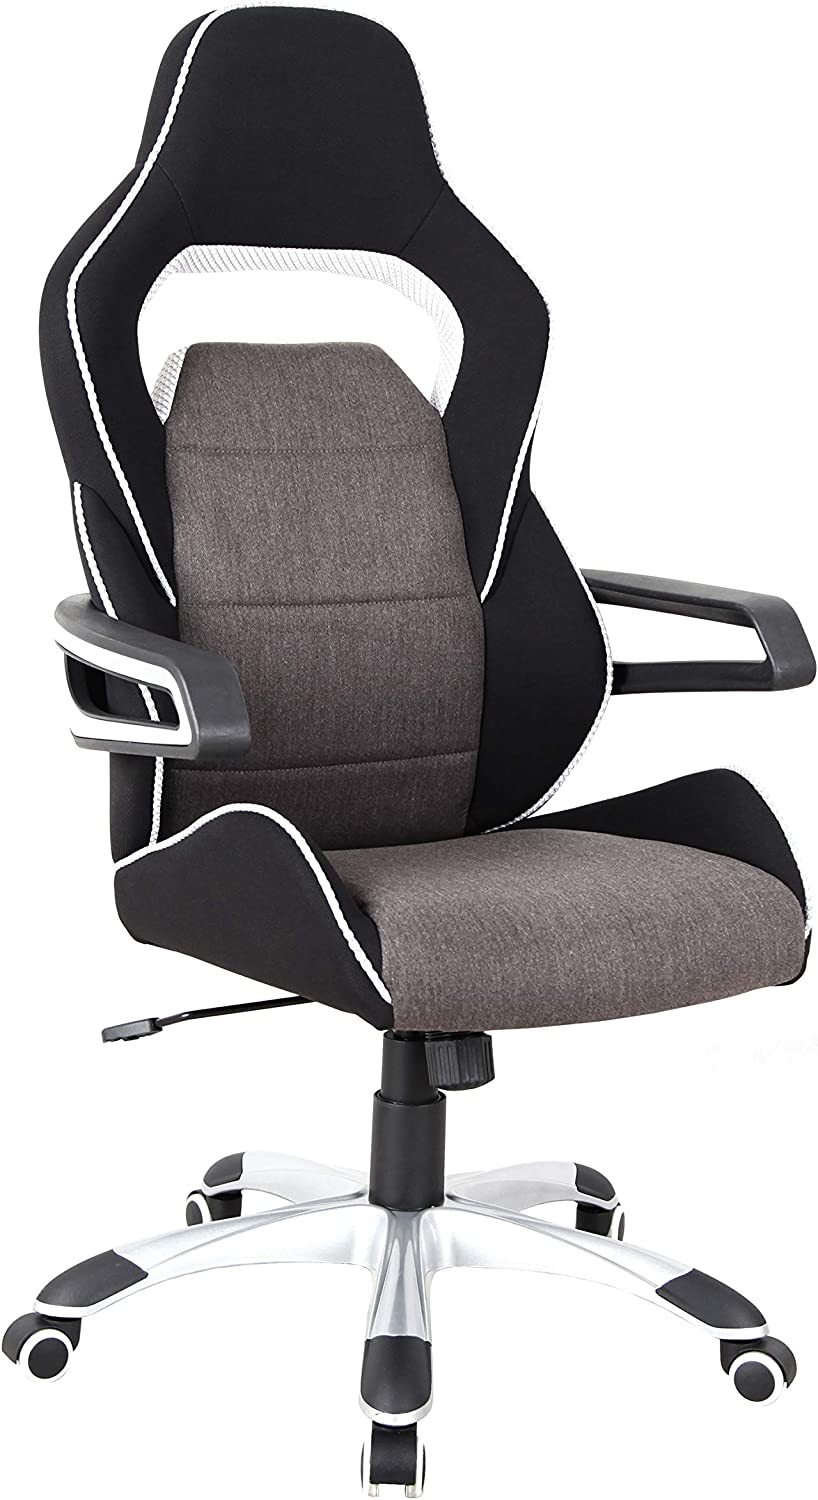 Techni Mobili Executive Ergonomic Upholstered Racing Style Home & Office, Grey - $116.99